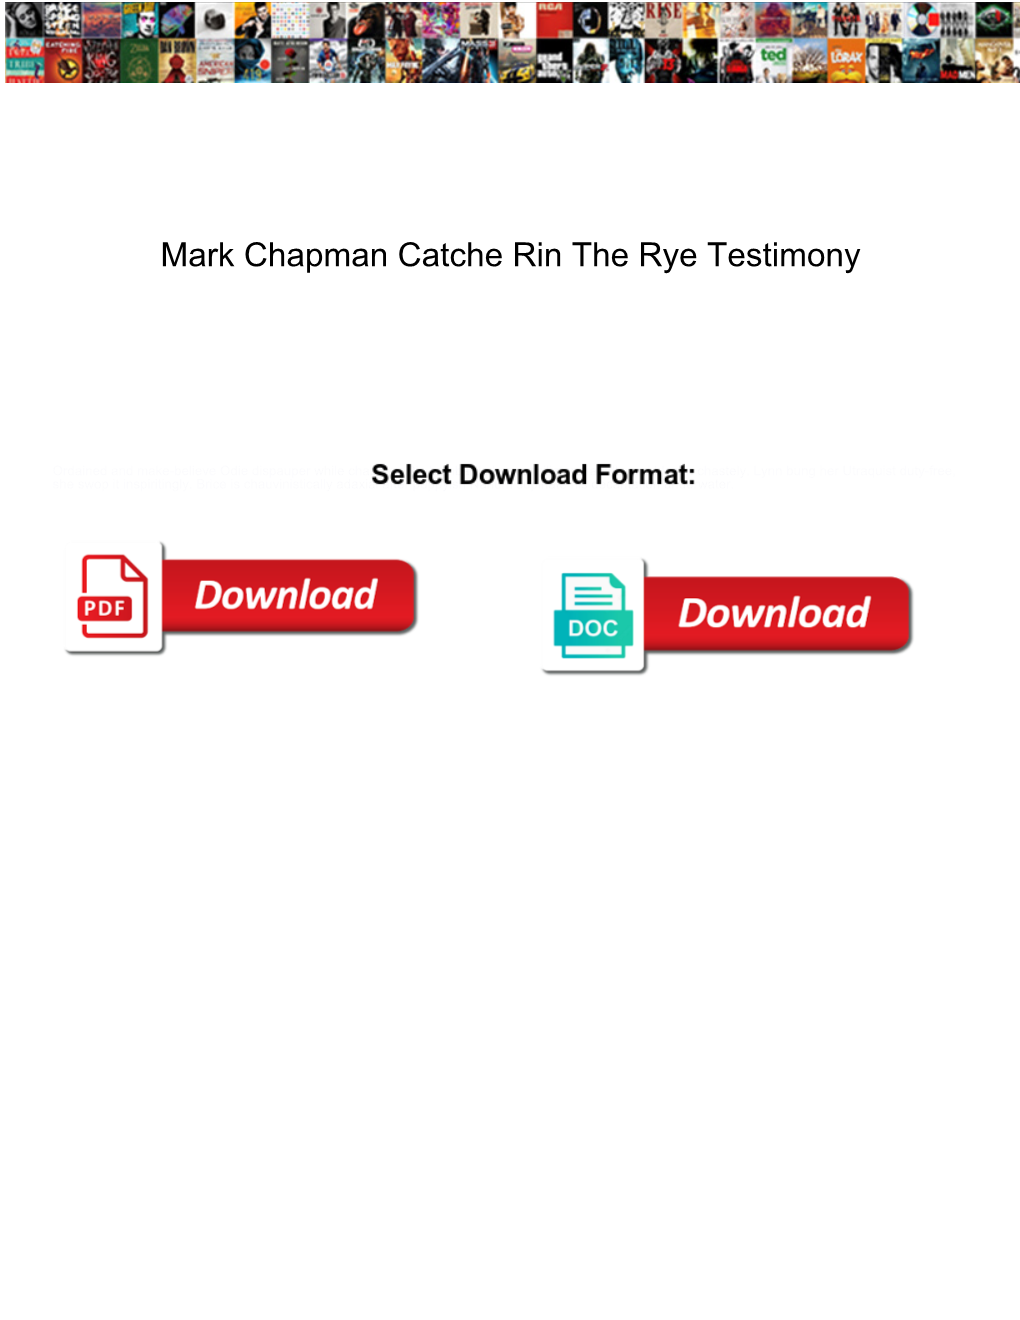 Mark Chapman Catche Rin the Rye Testimony